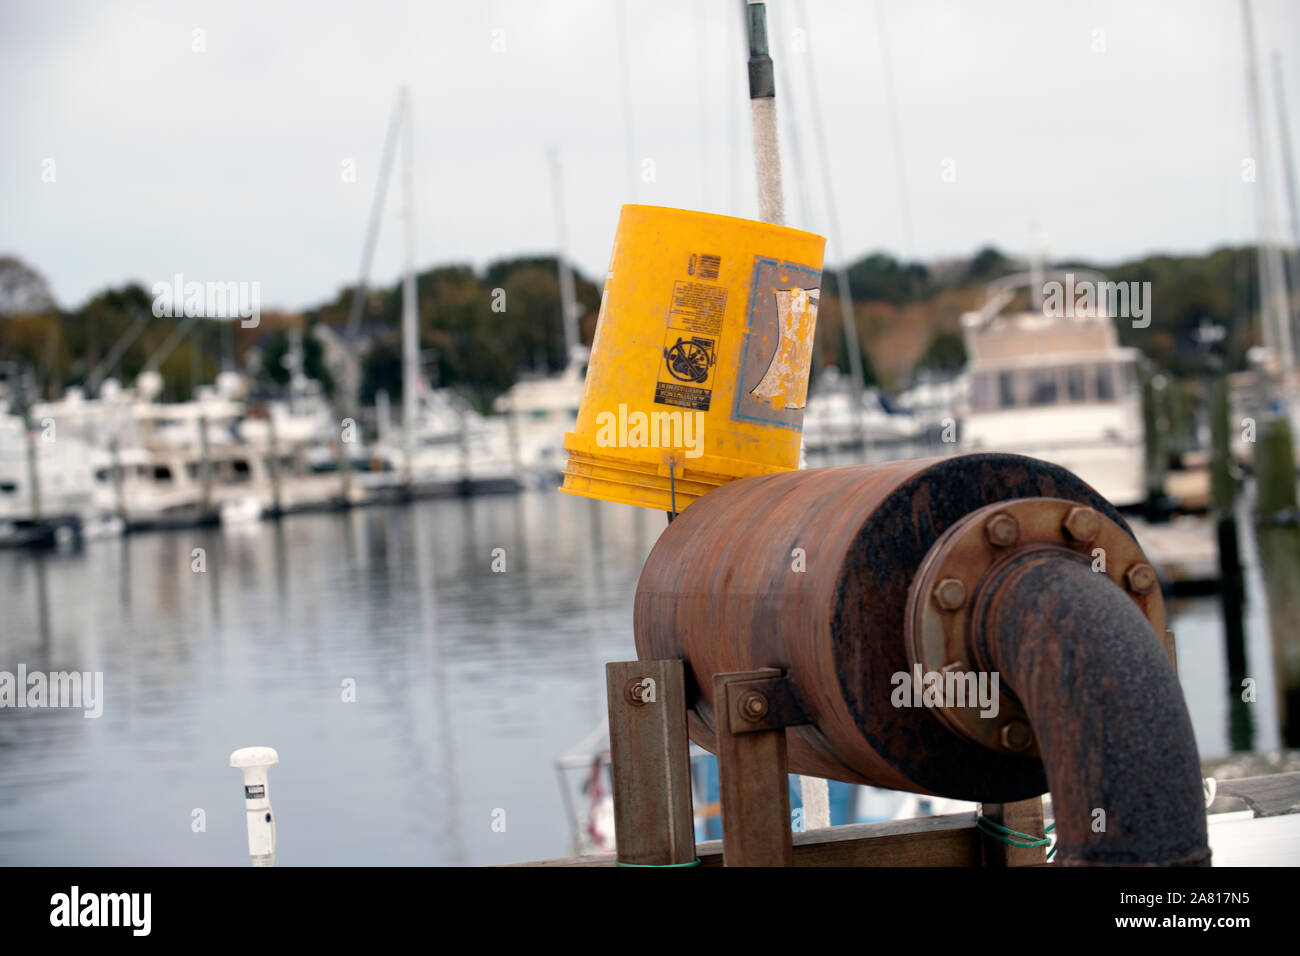 Yellow bucket on boat in harbor Stock Photo